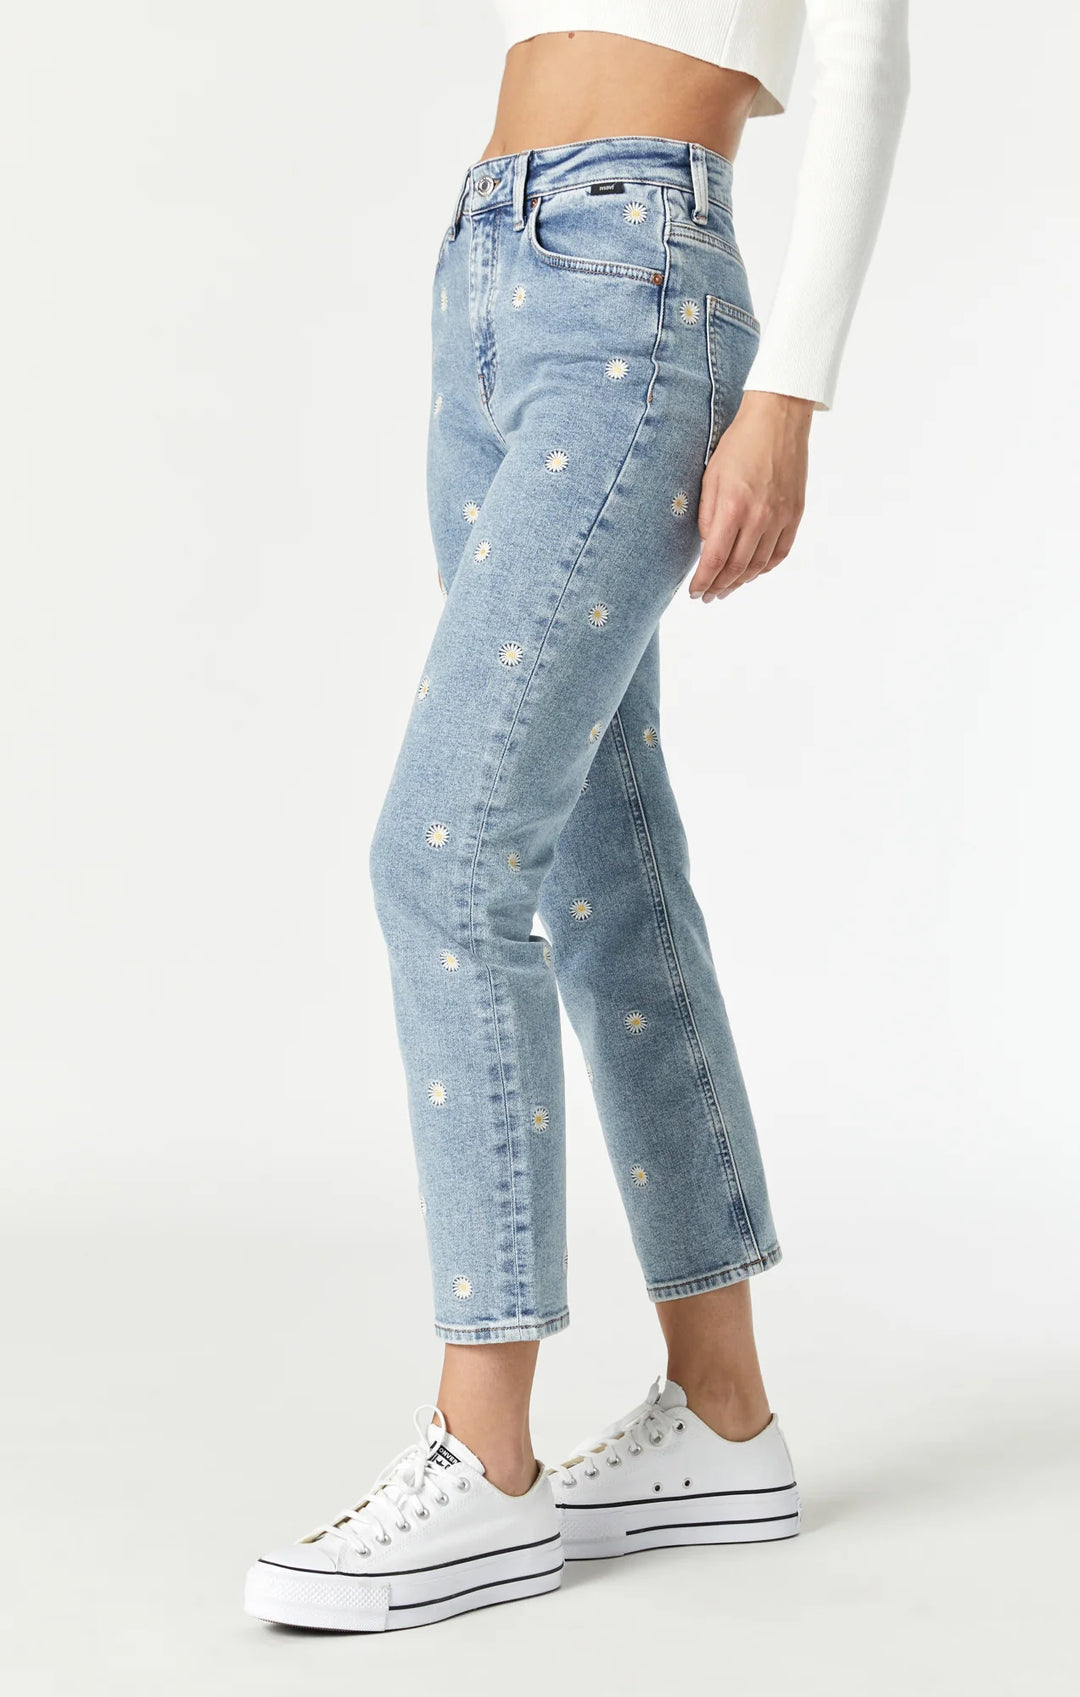 New York Daisy Jeans